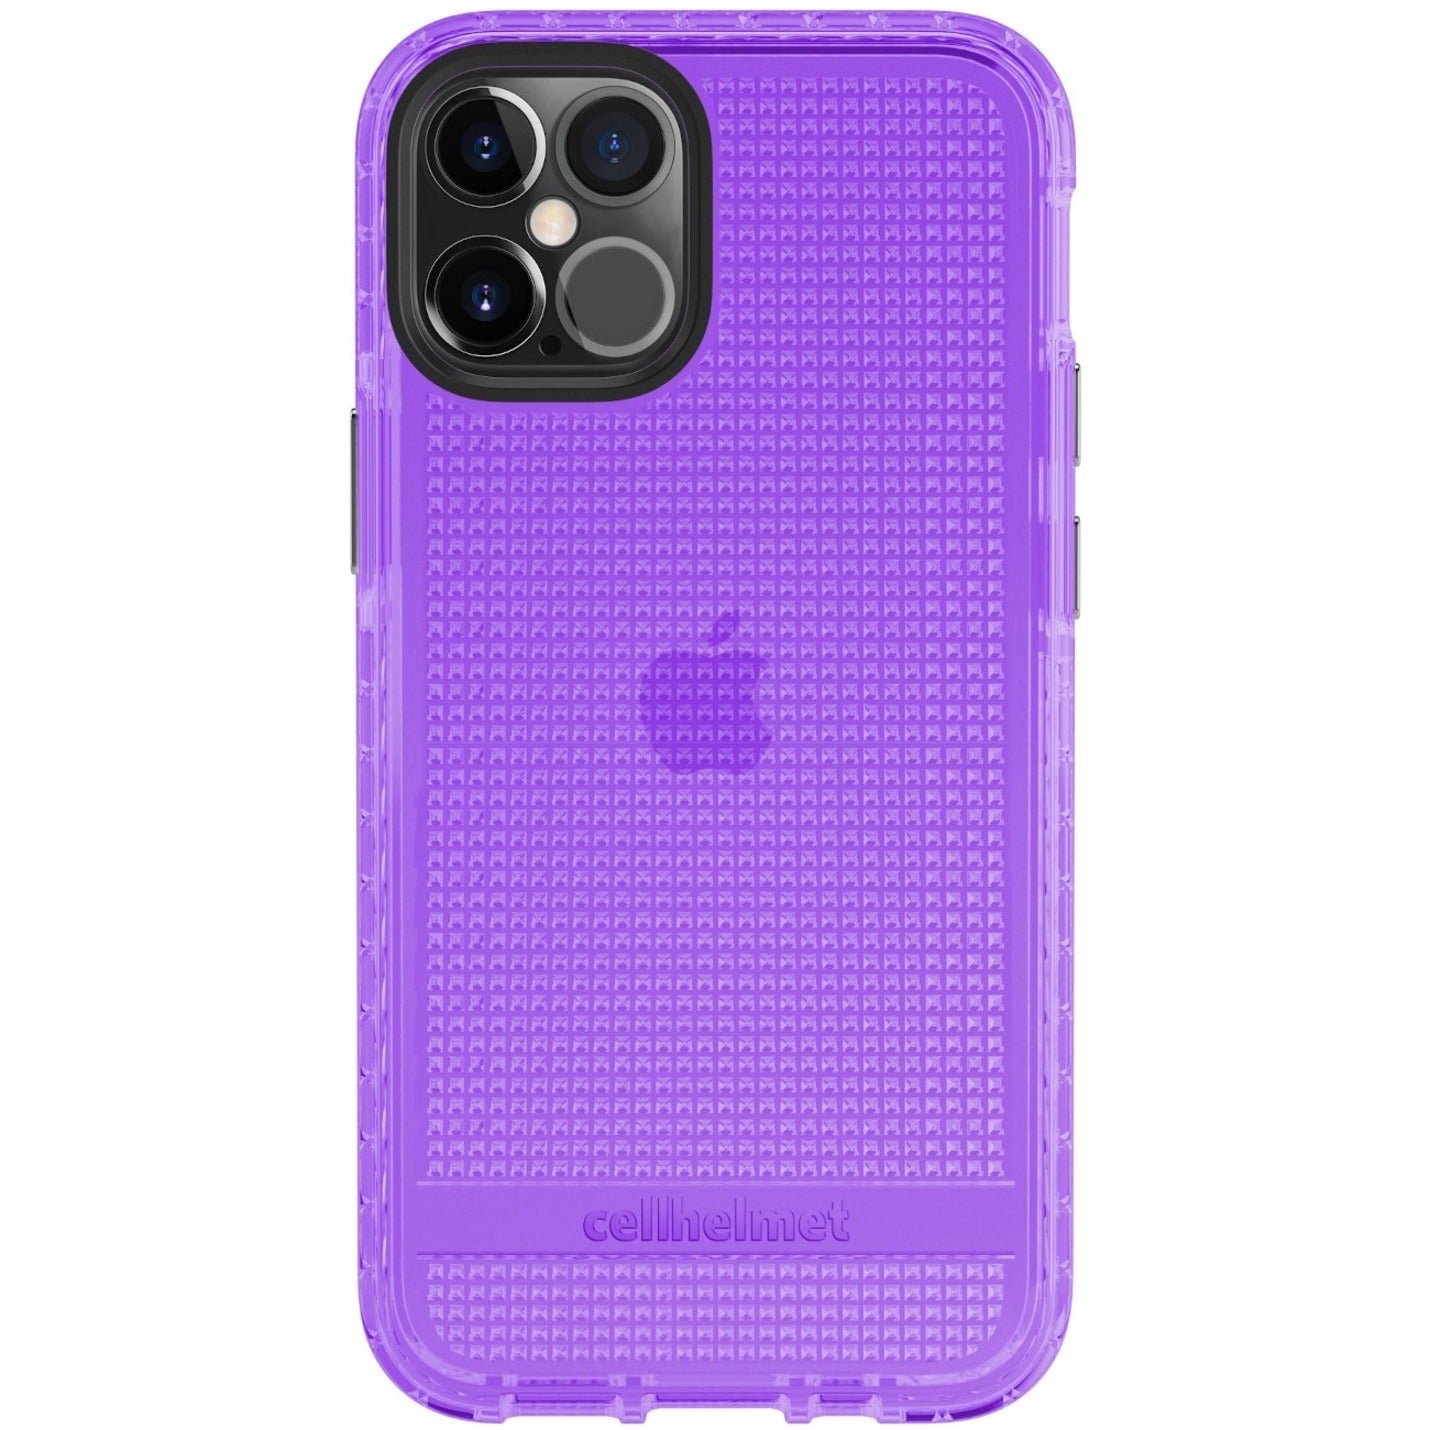 Cellhelmet C-ALT-i6.1-2020-PUR Altitude X Series for iPhone 12 / 12 Pro (Purple), Heat Resistant, Impact Resistant, TPU Case